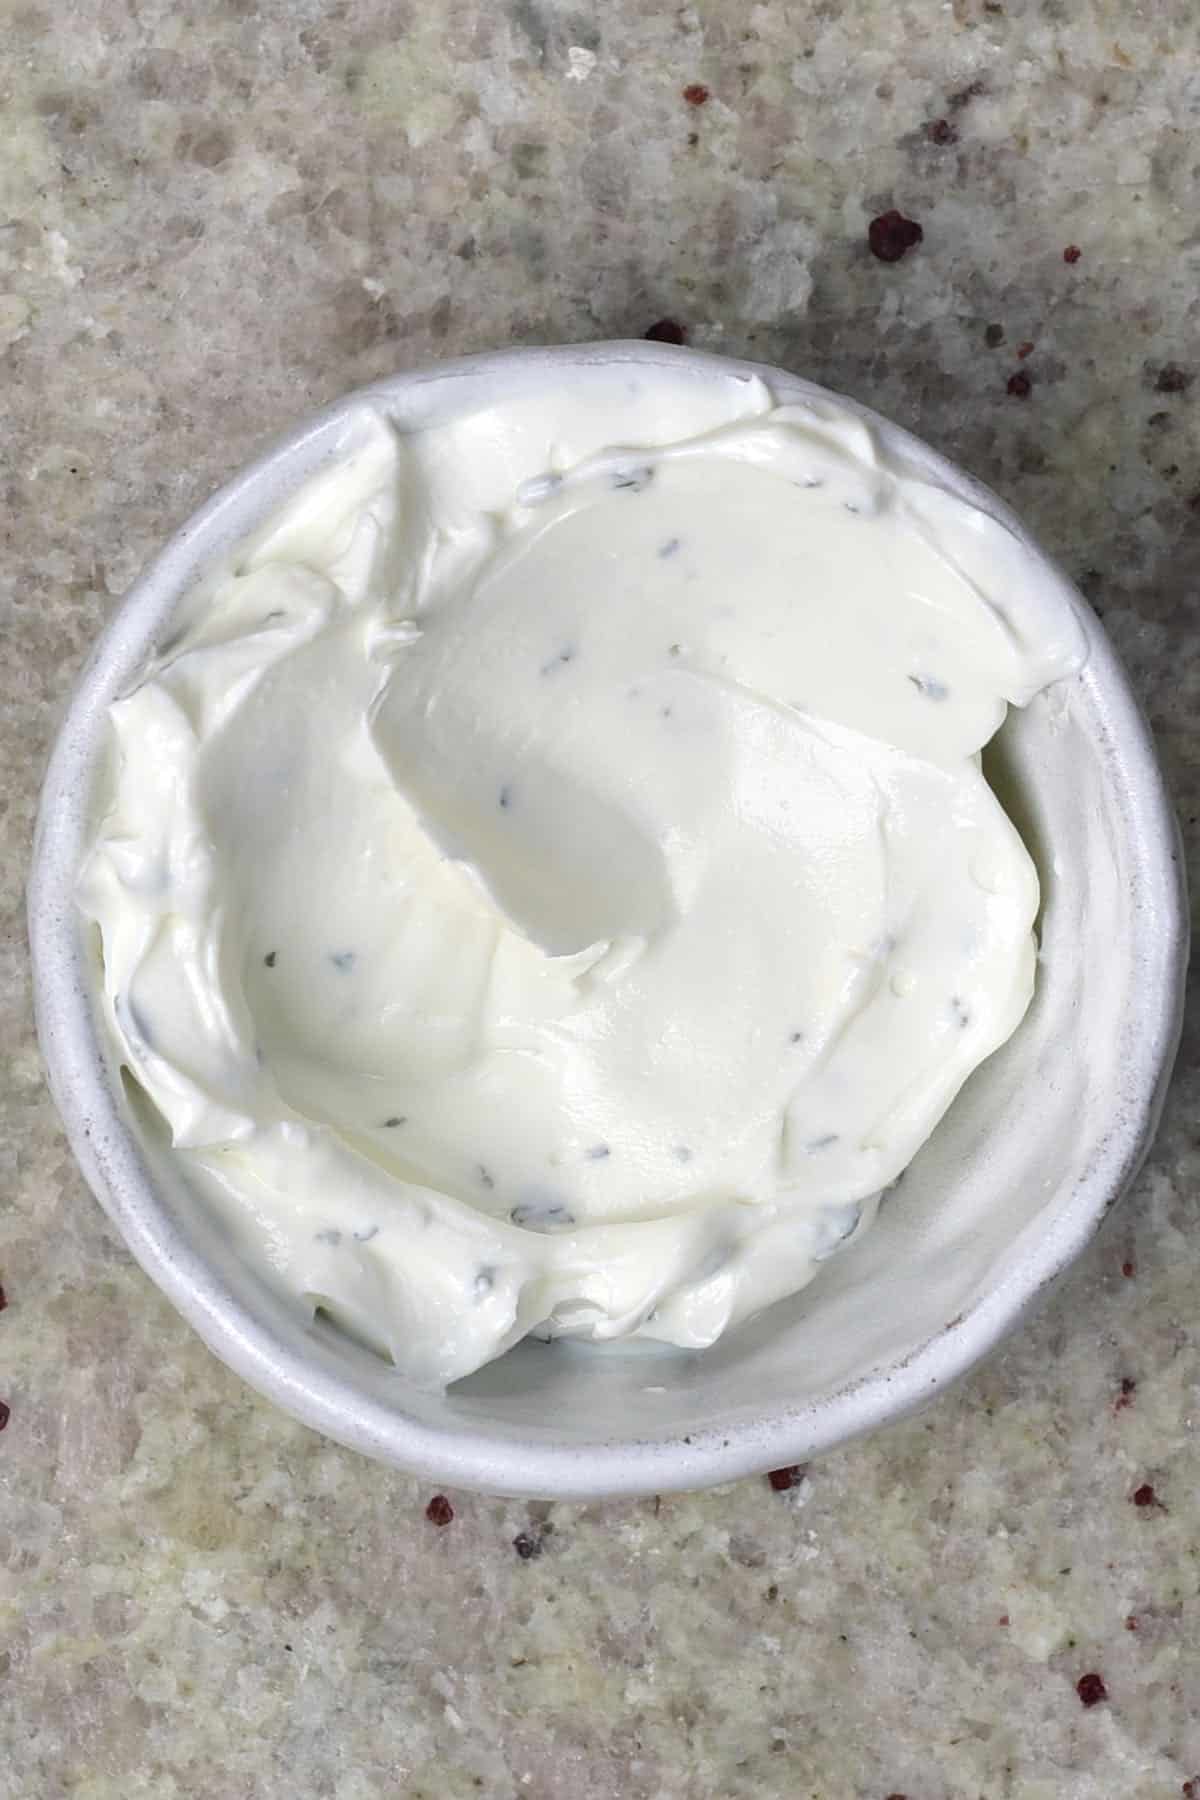 A bowl with yogurt sauce